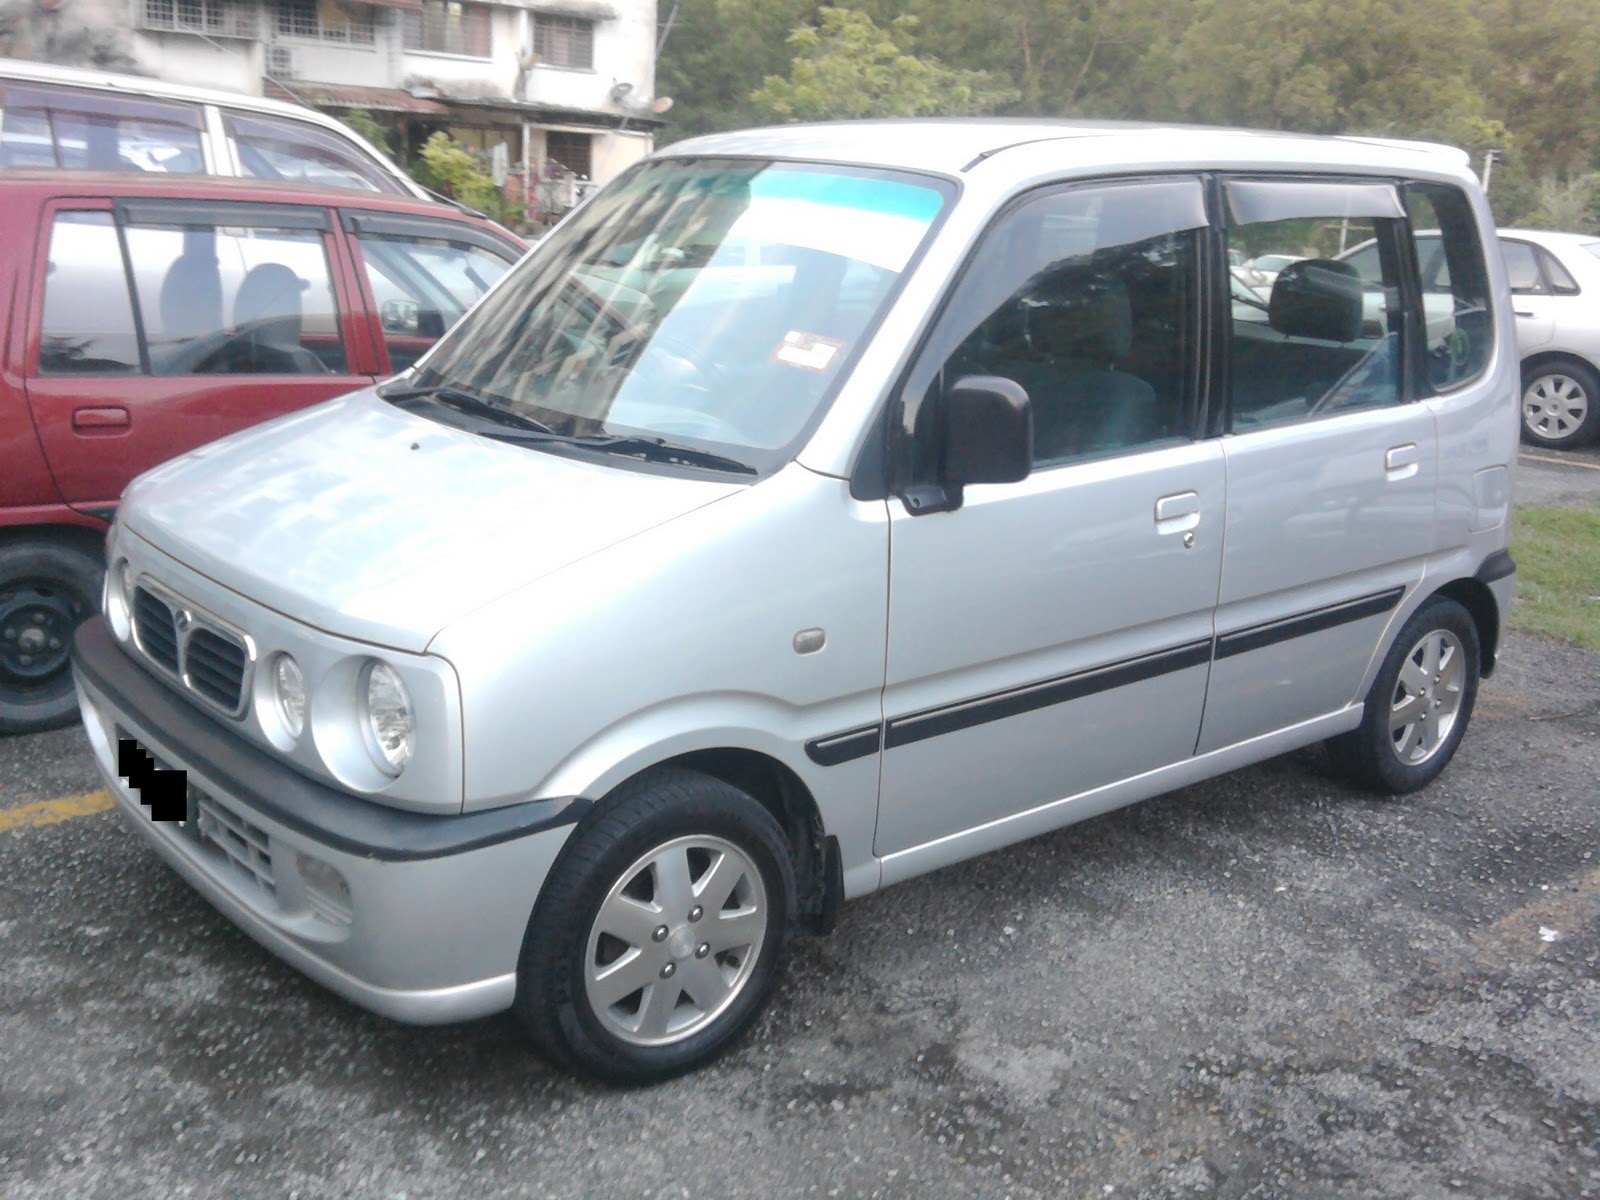 JIUN: Perodua Kenari 2001 year end new model EZ auto for sale